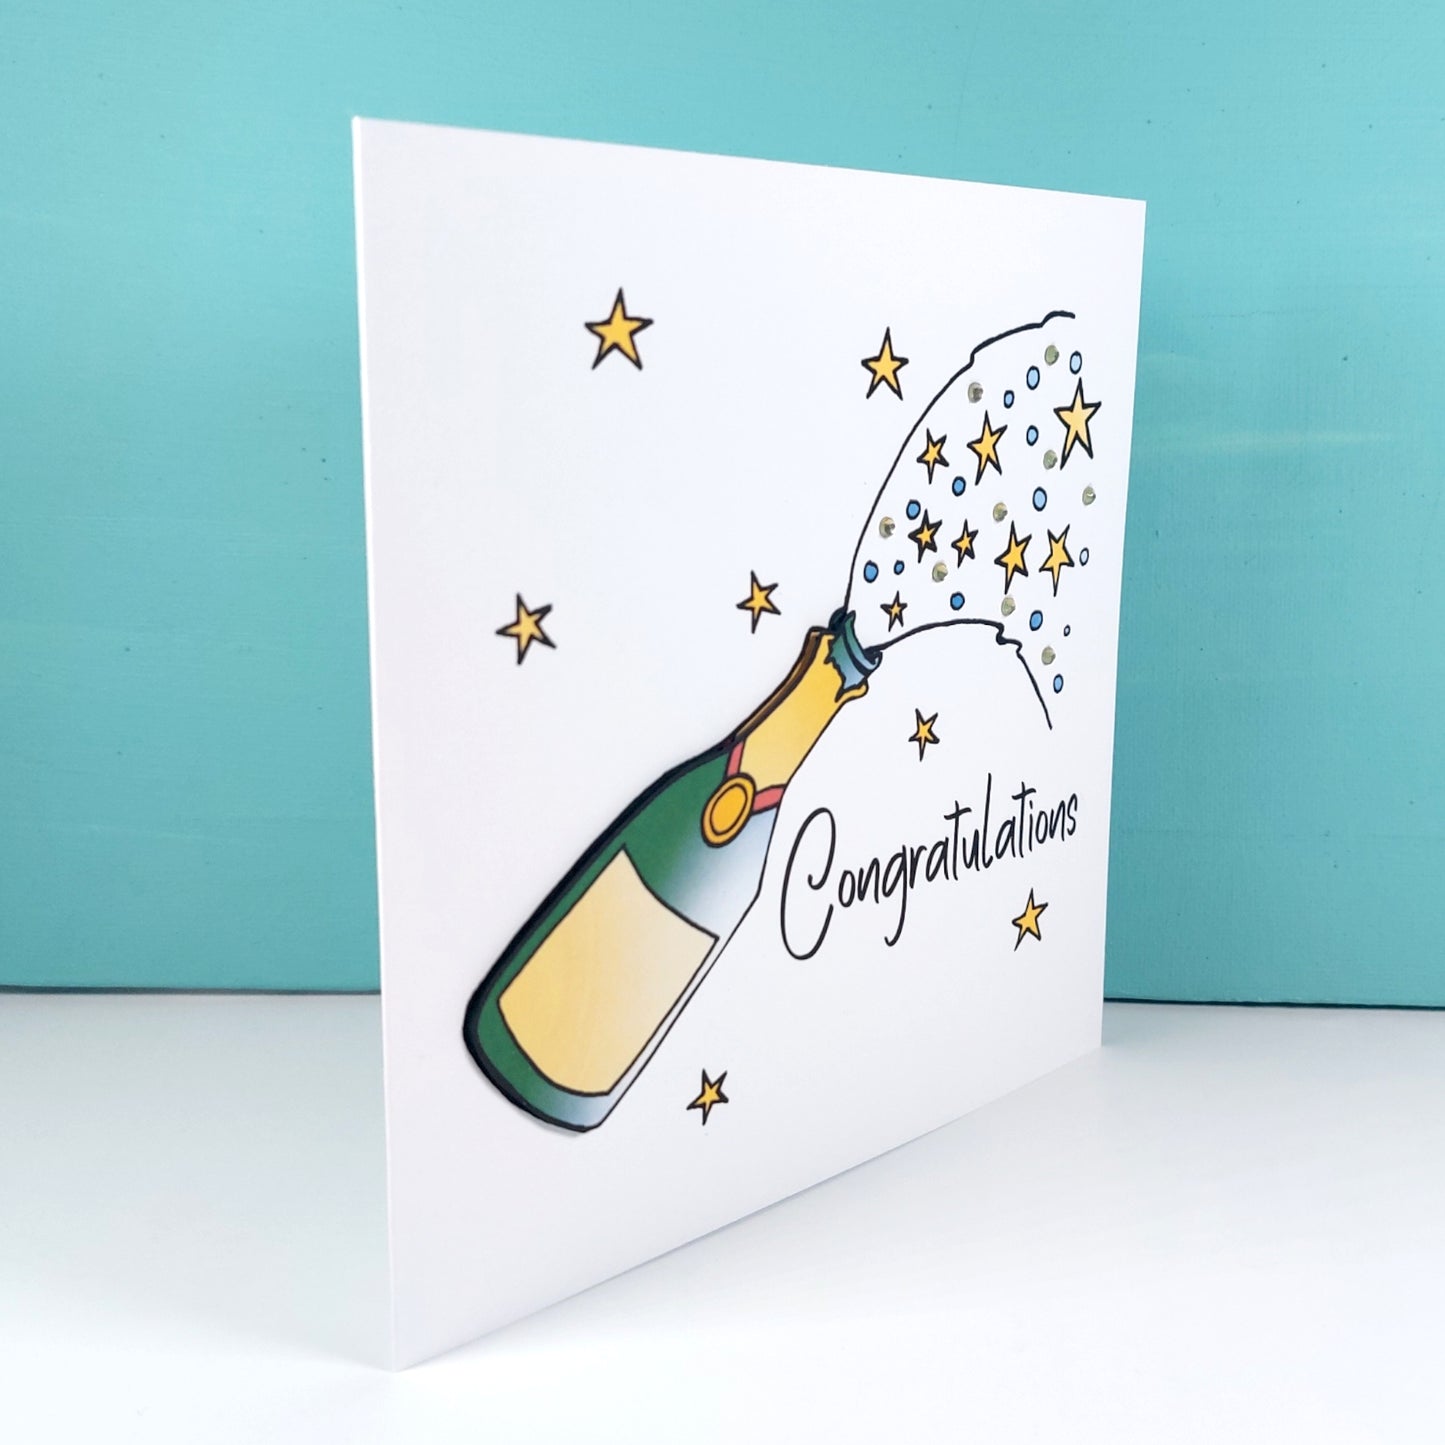 Champaign bottle Congratulations Card